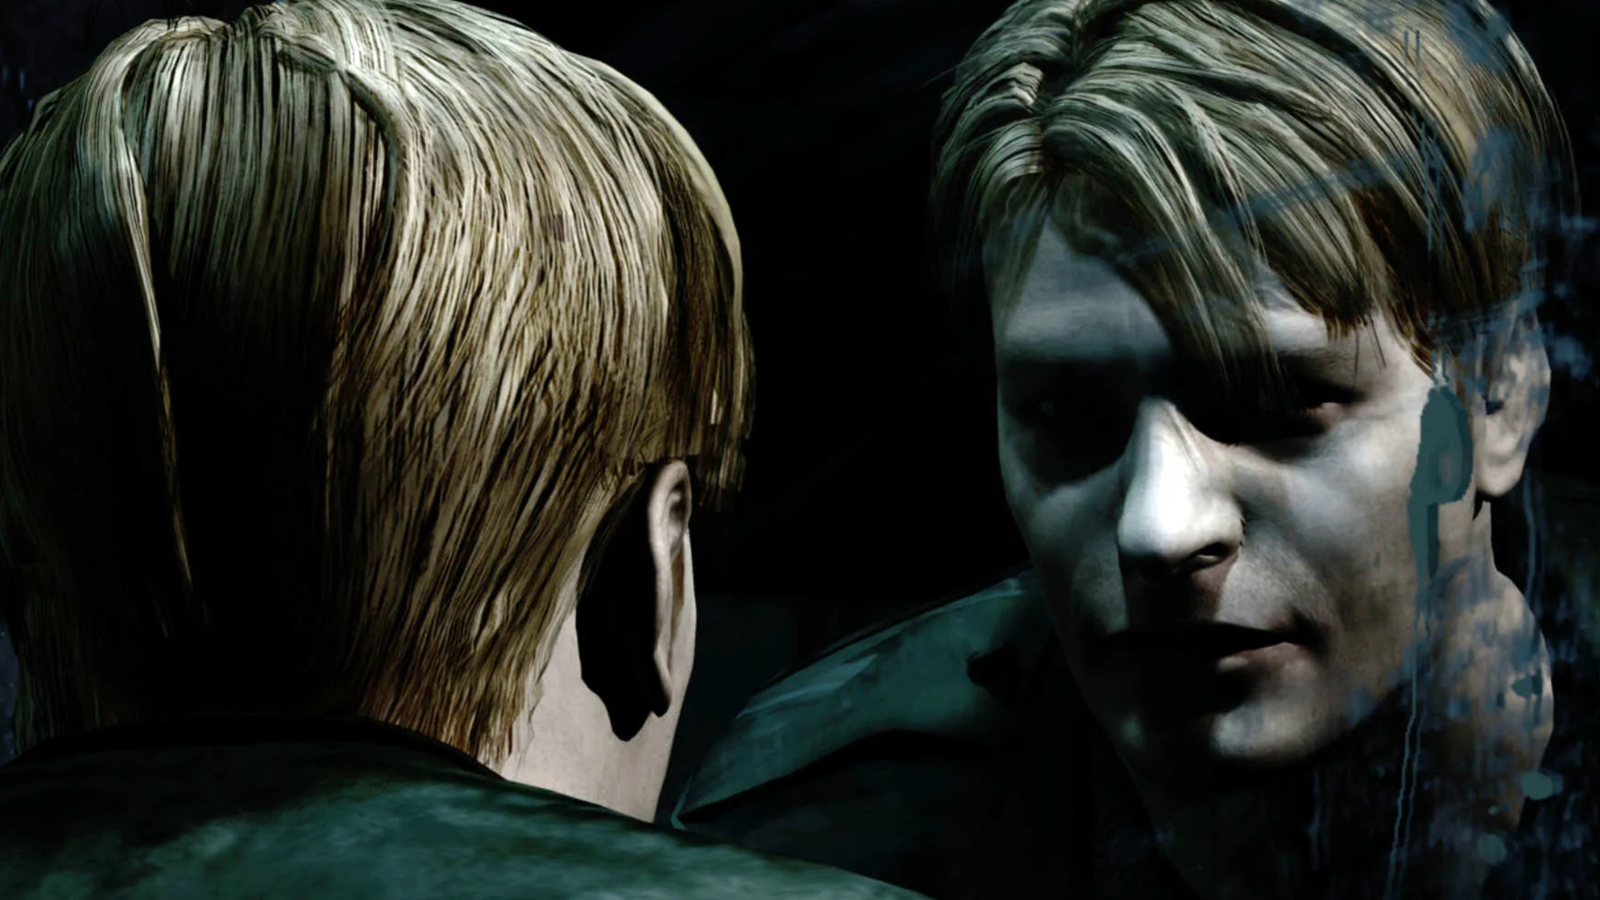 Rumor: New Silent Hill game images leak, get DMCA'd by Konami